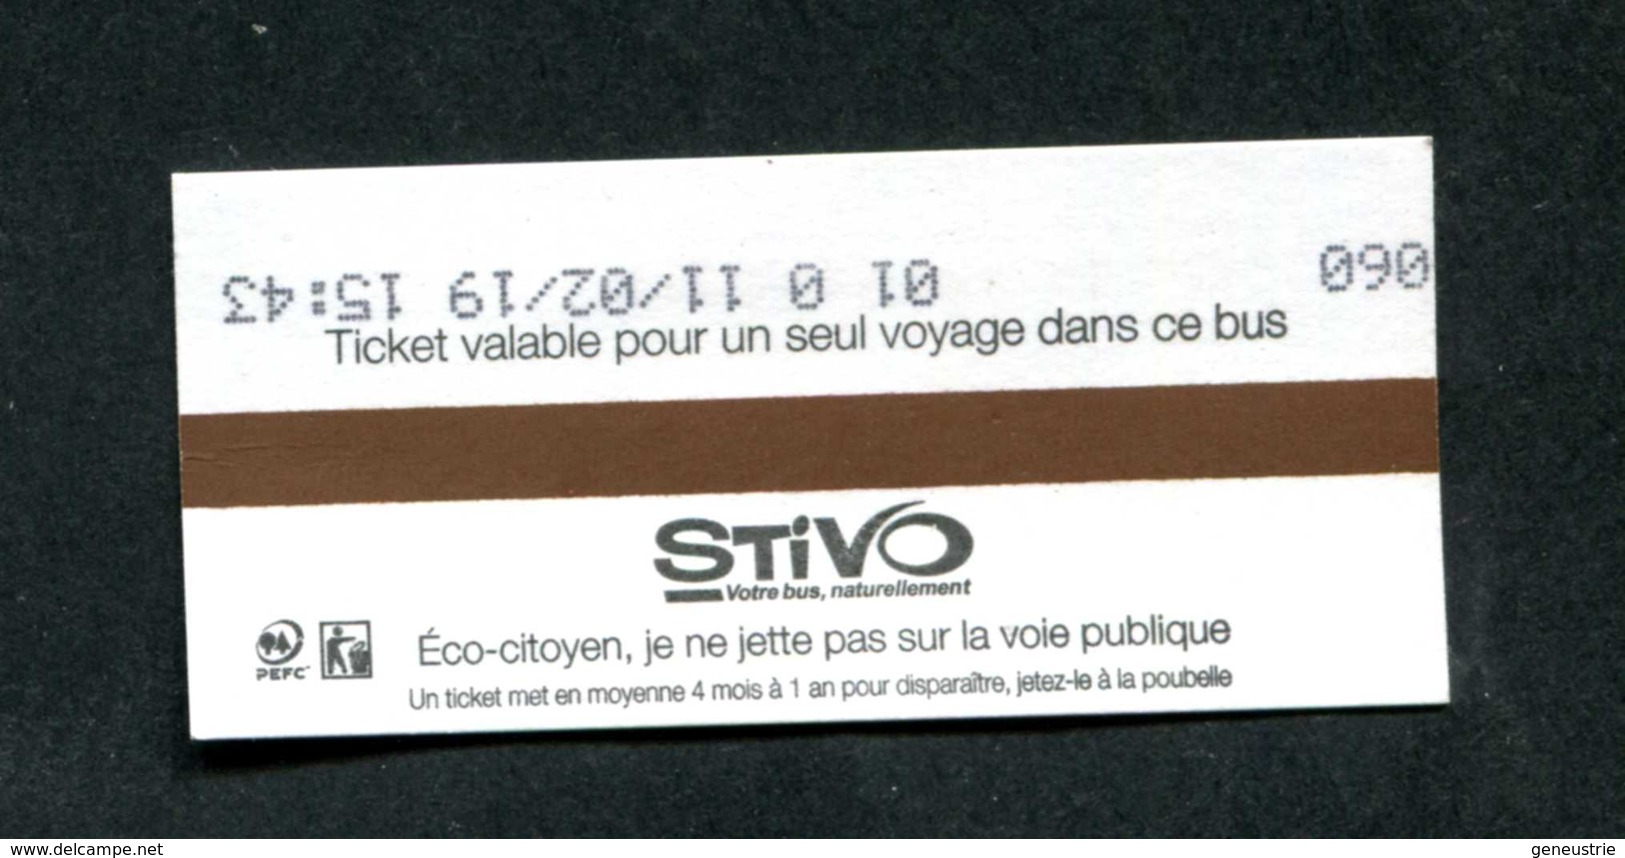 Ticket De Bus / STIVO - Cergy-Pontoise - Paris - Ile-de-France - Bus Ticket Transportation - Europe